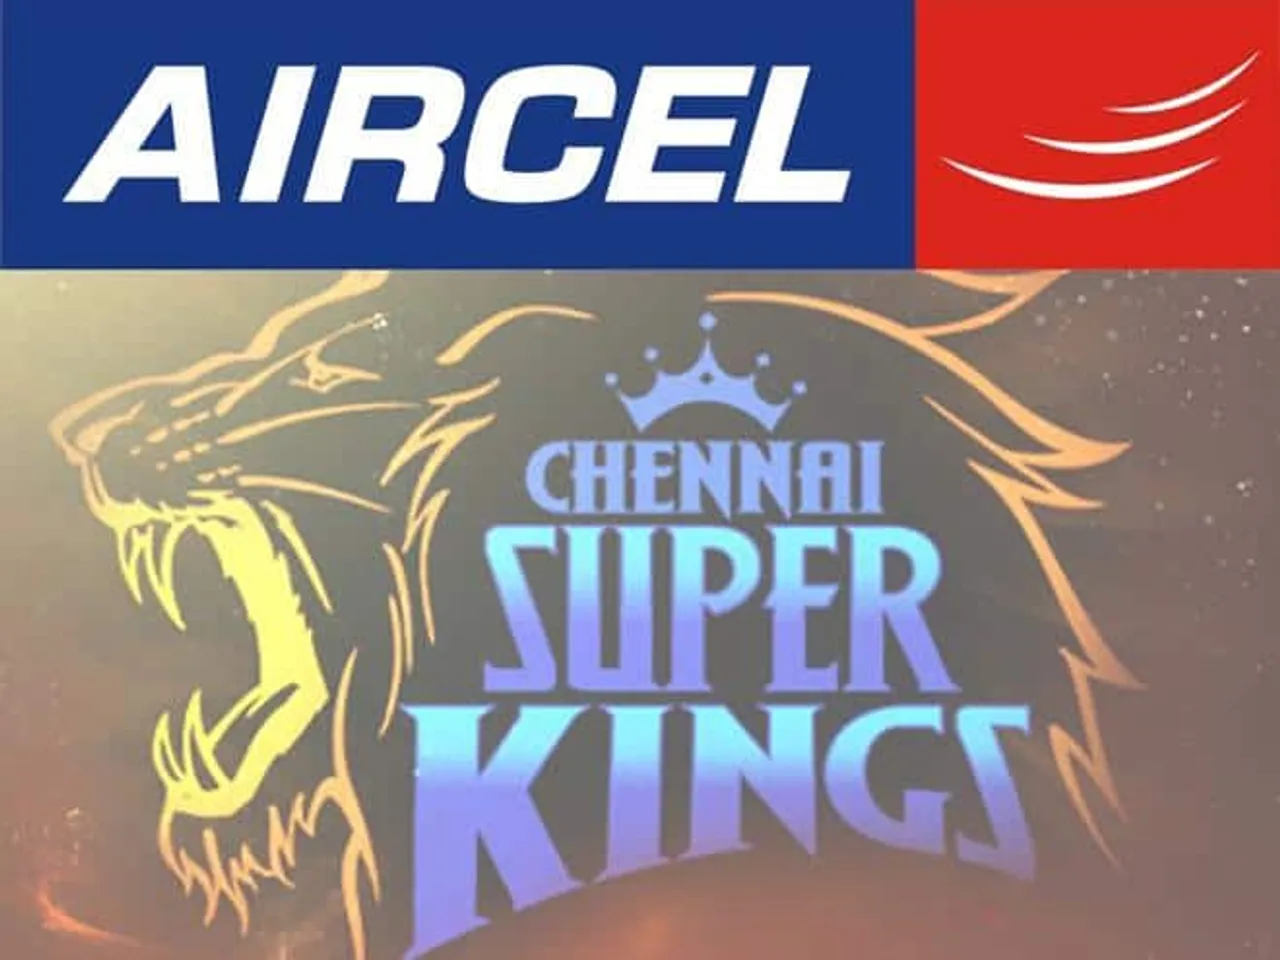 Aircel and Chennai Super Kings